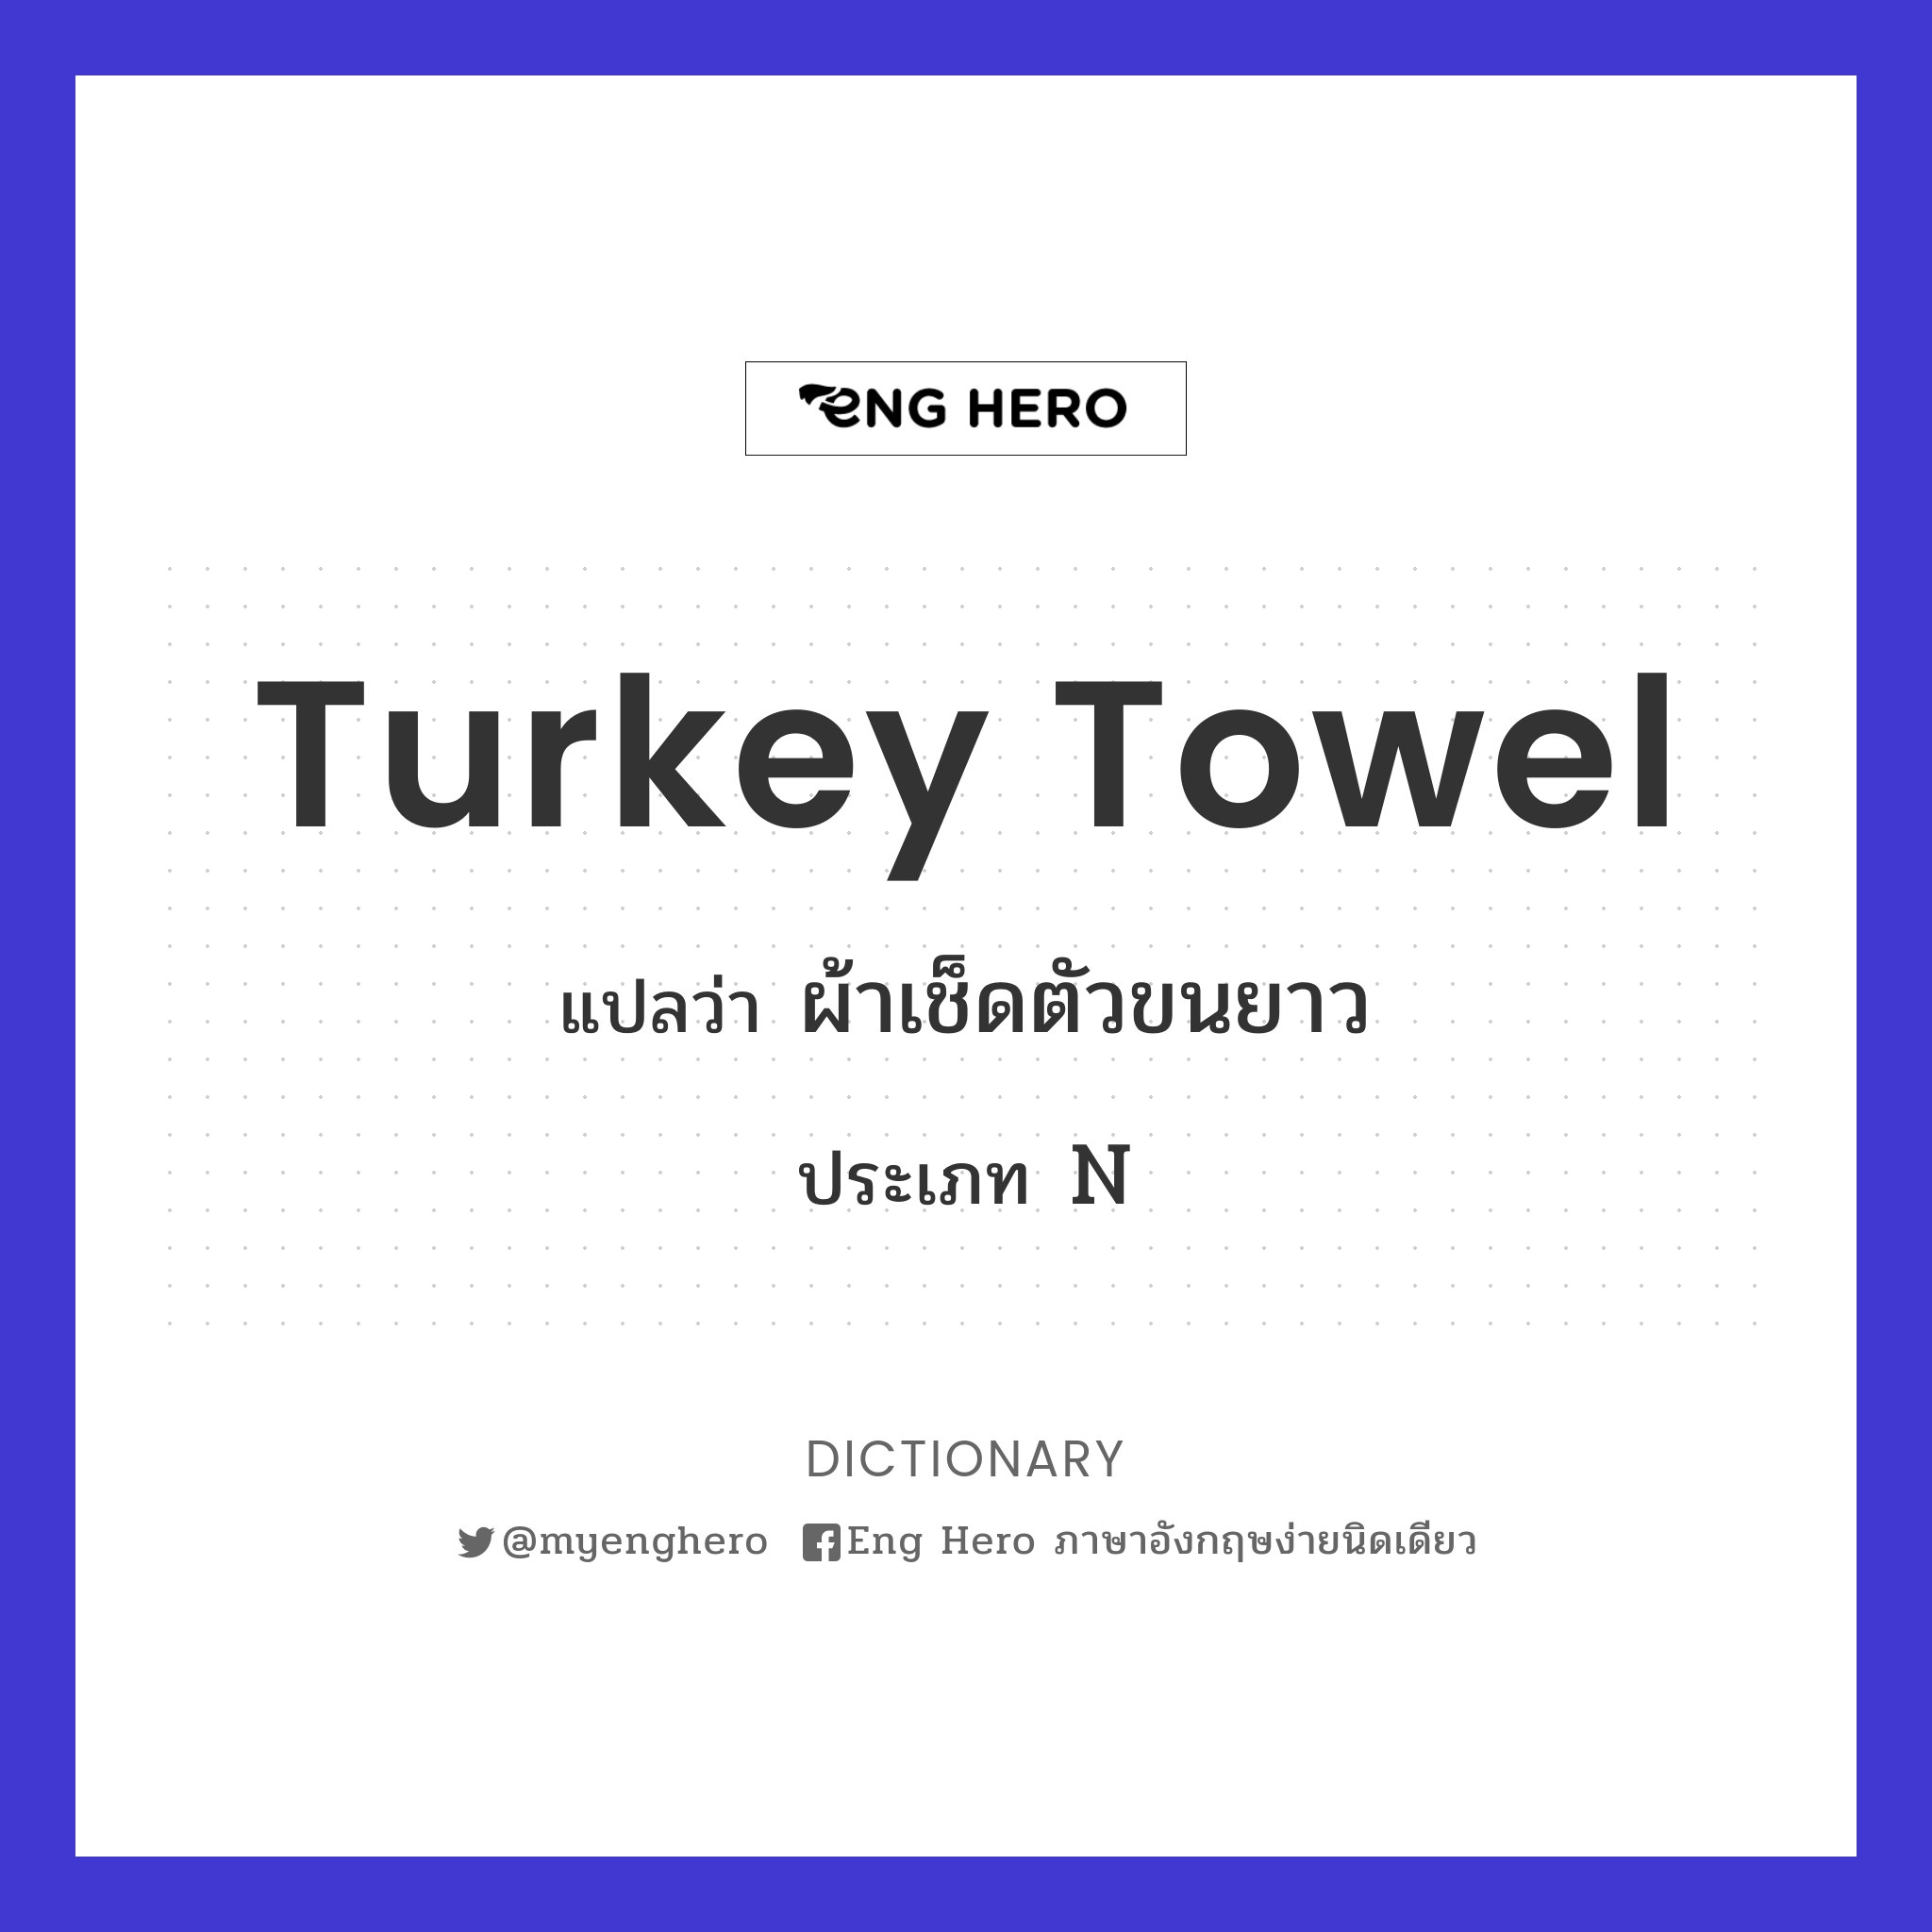 Turkey towel